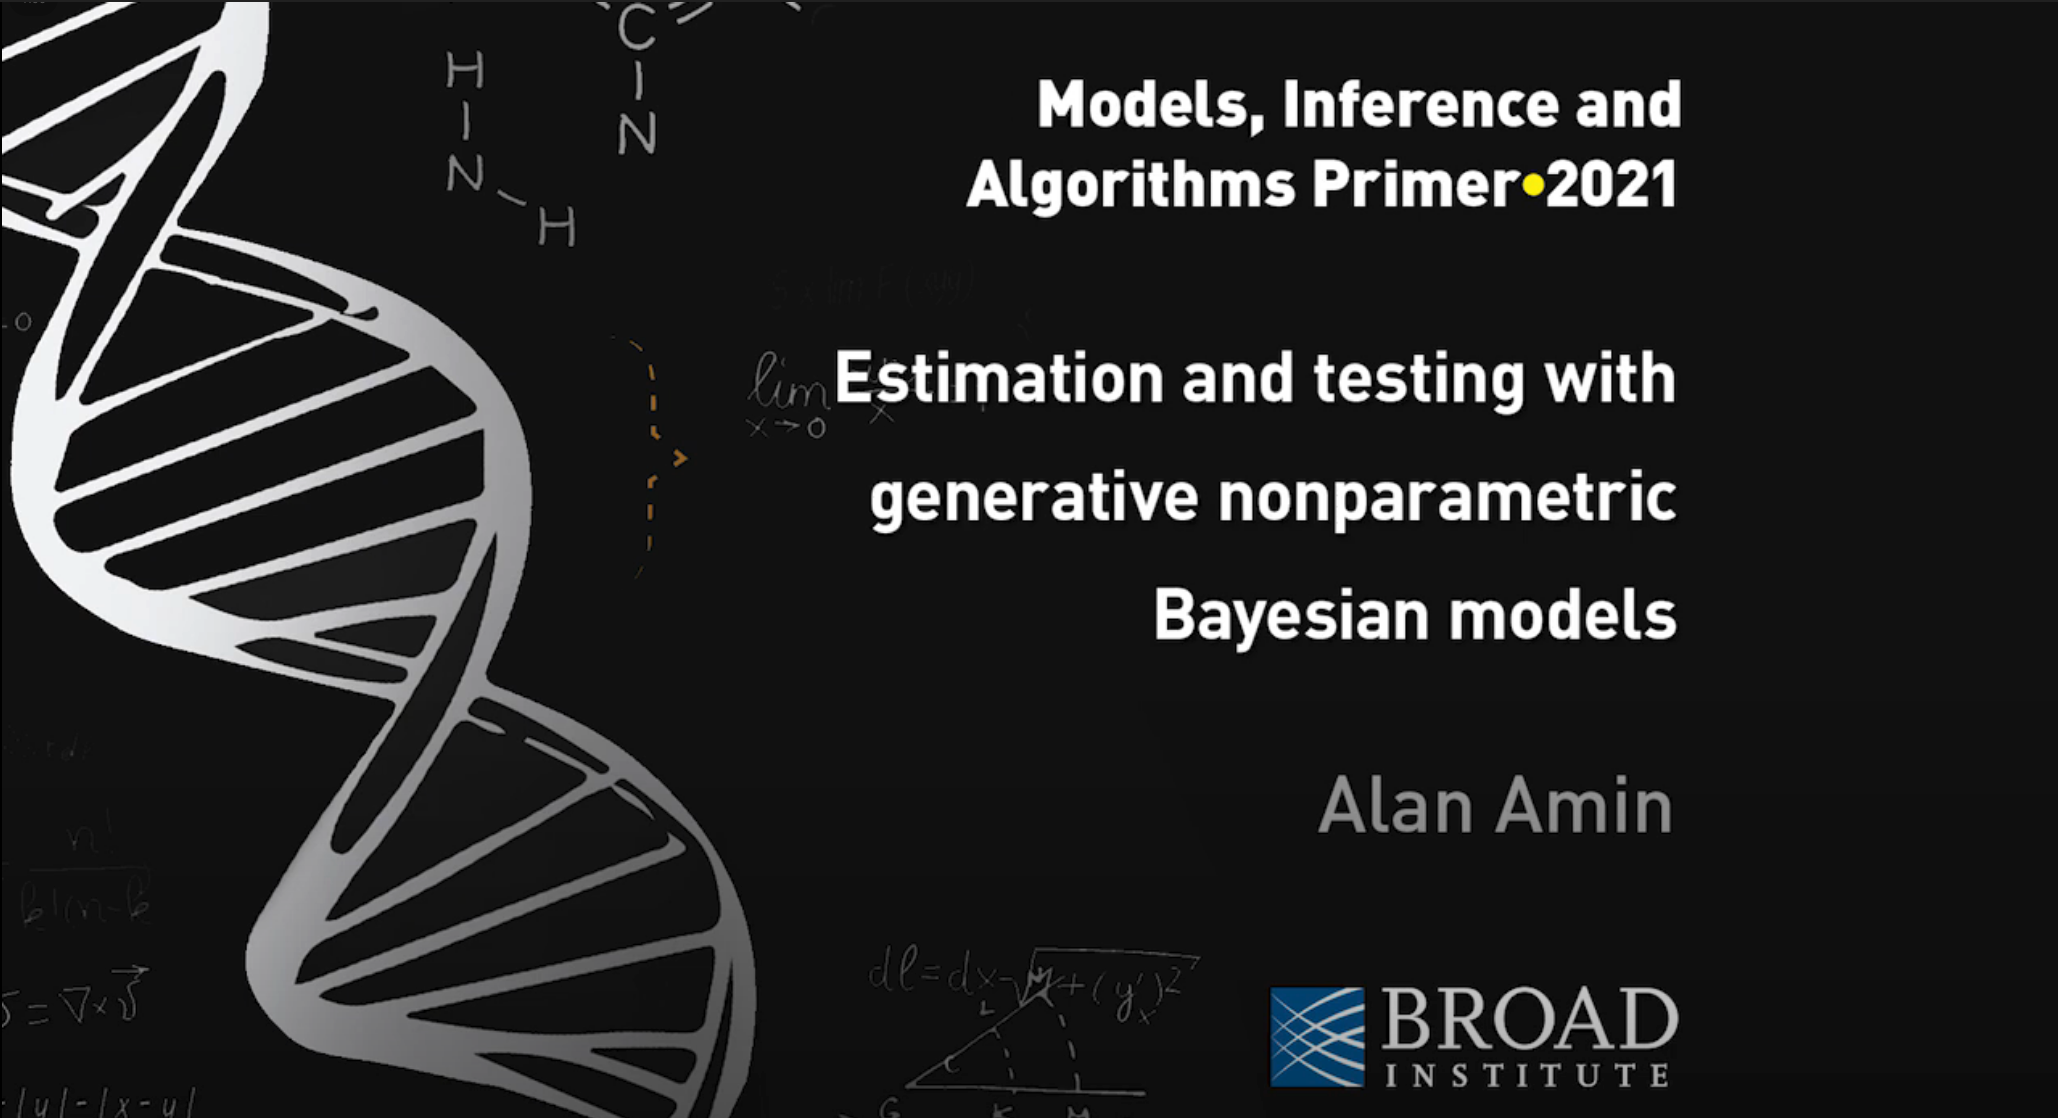 MIA: Alan Amin—Estimation and testing with generative nonparametric Bayesian models